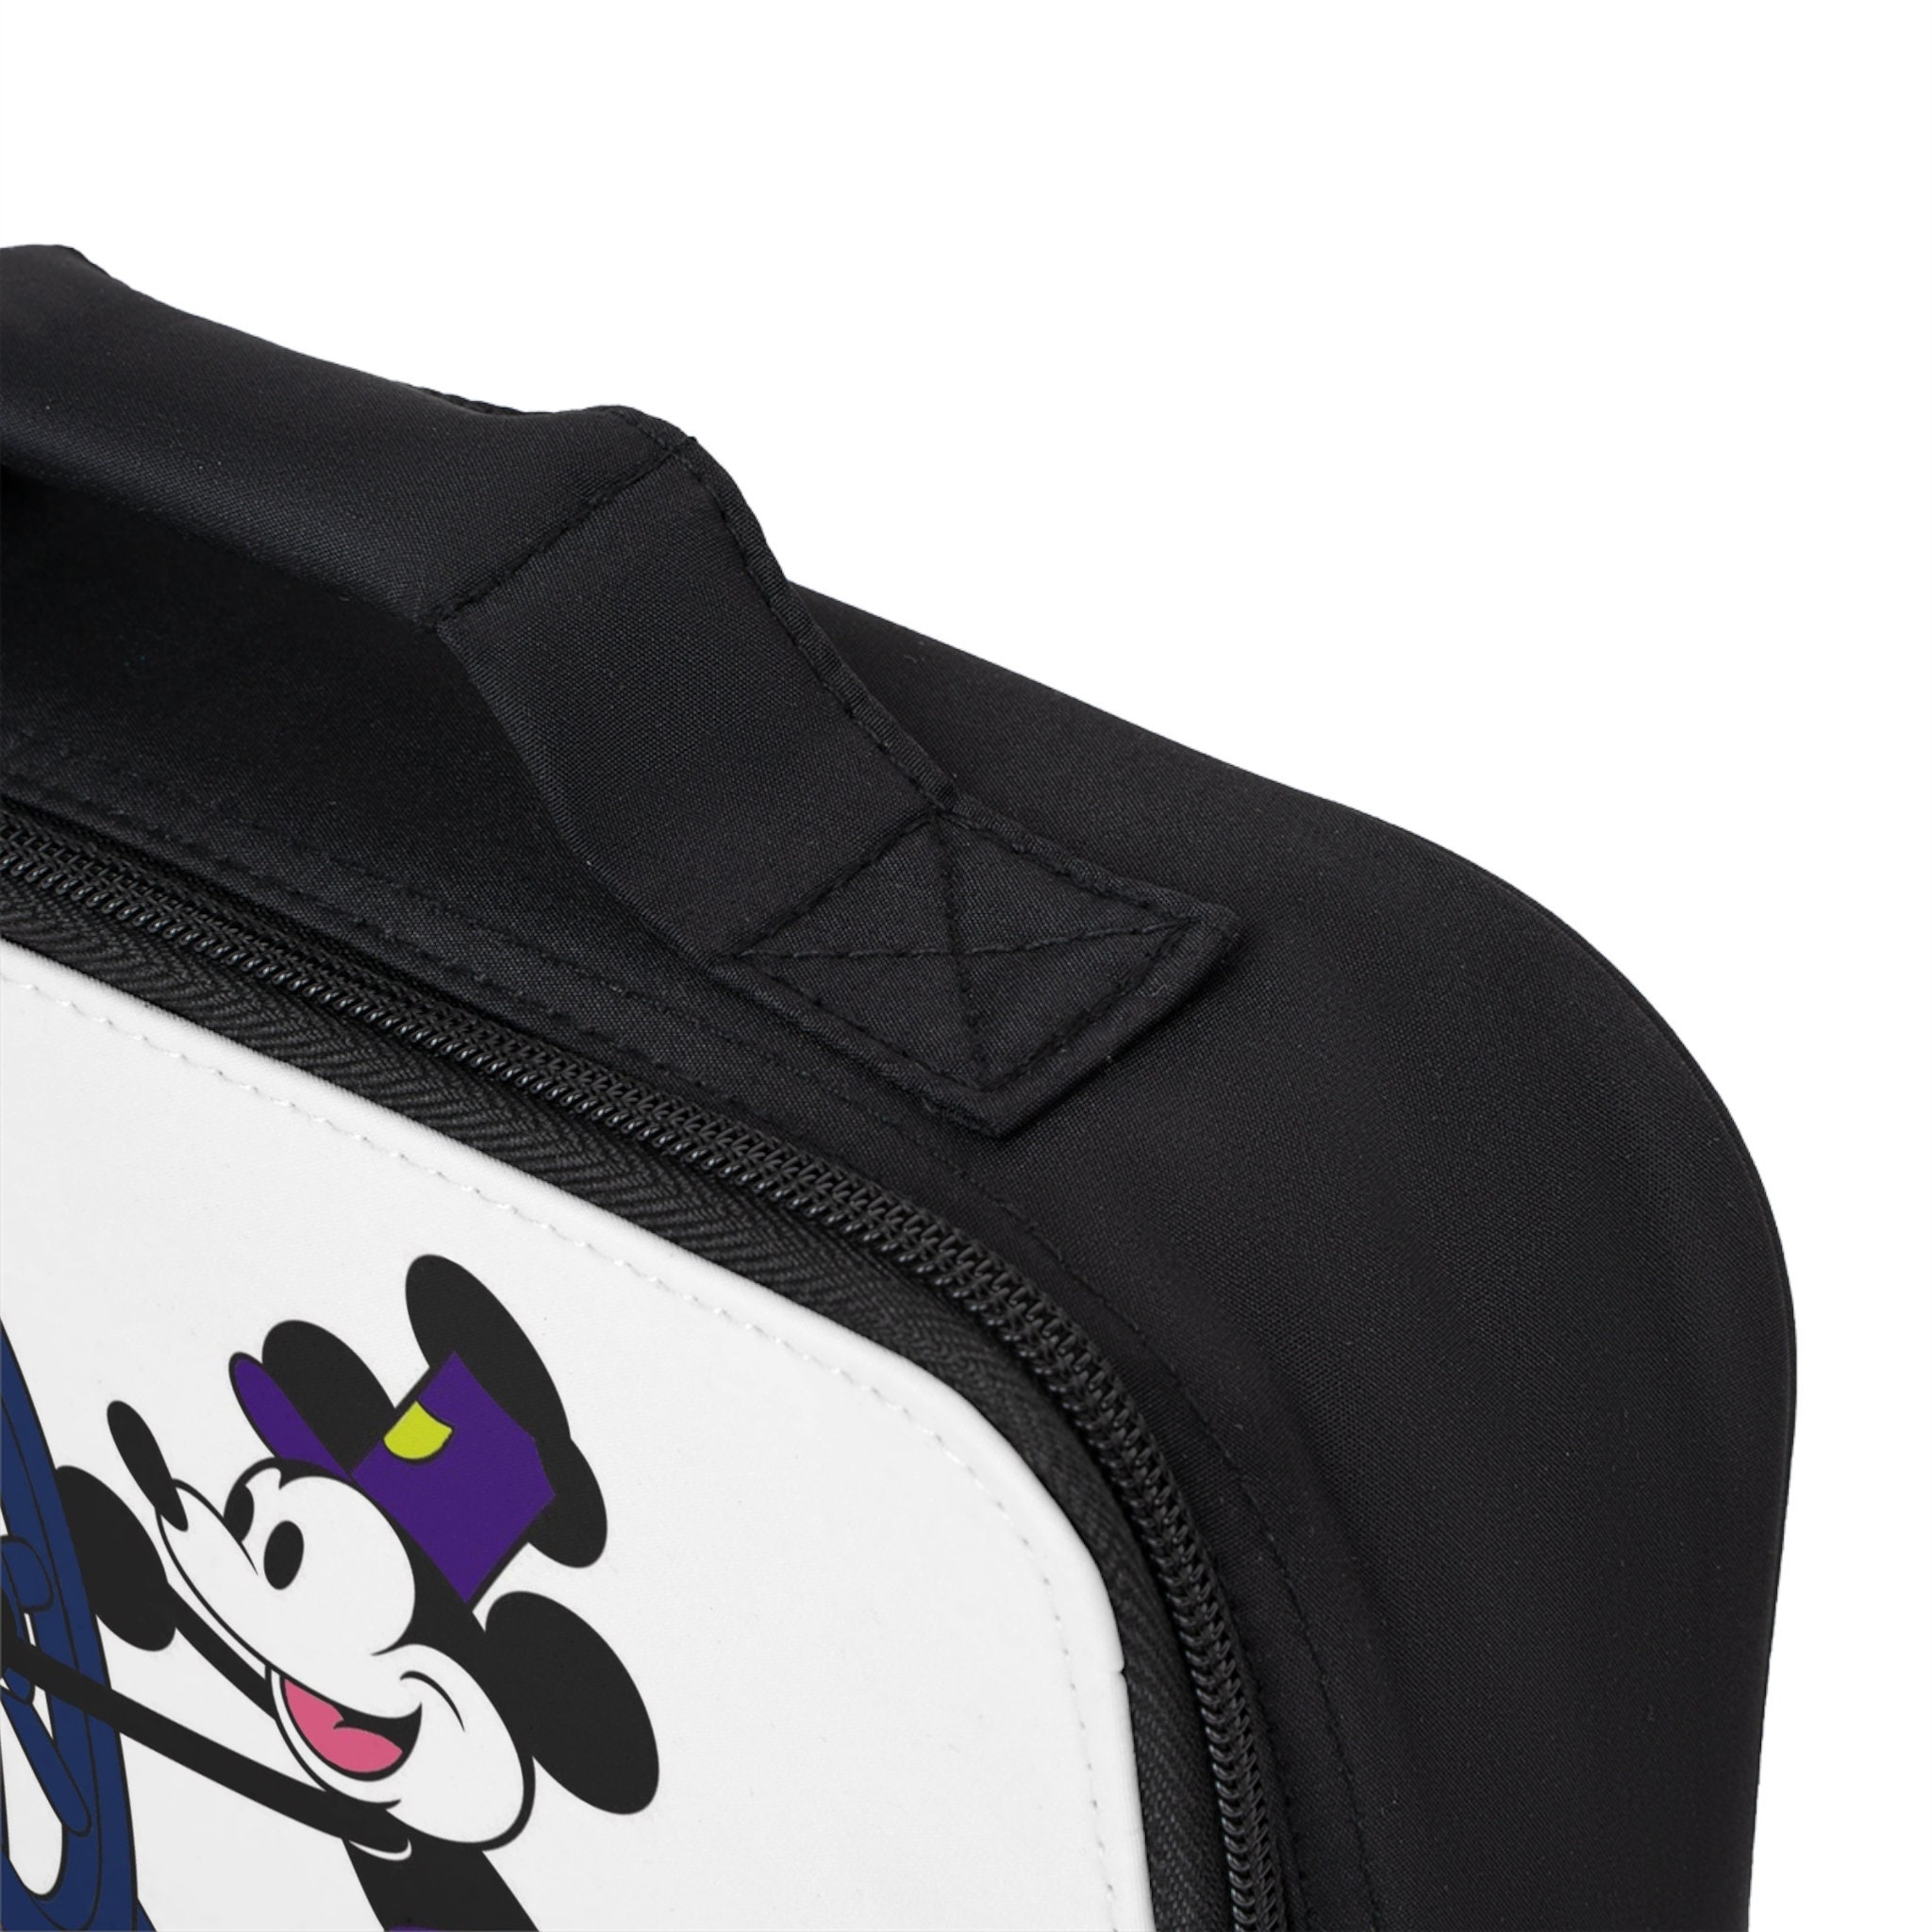 Disney Blue/Purple Steamboat Mickey Lunch Bag